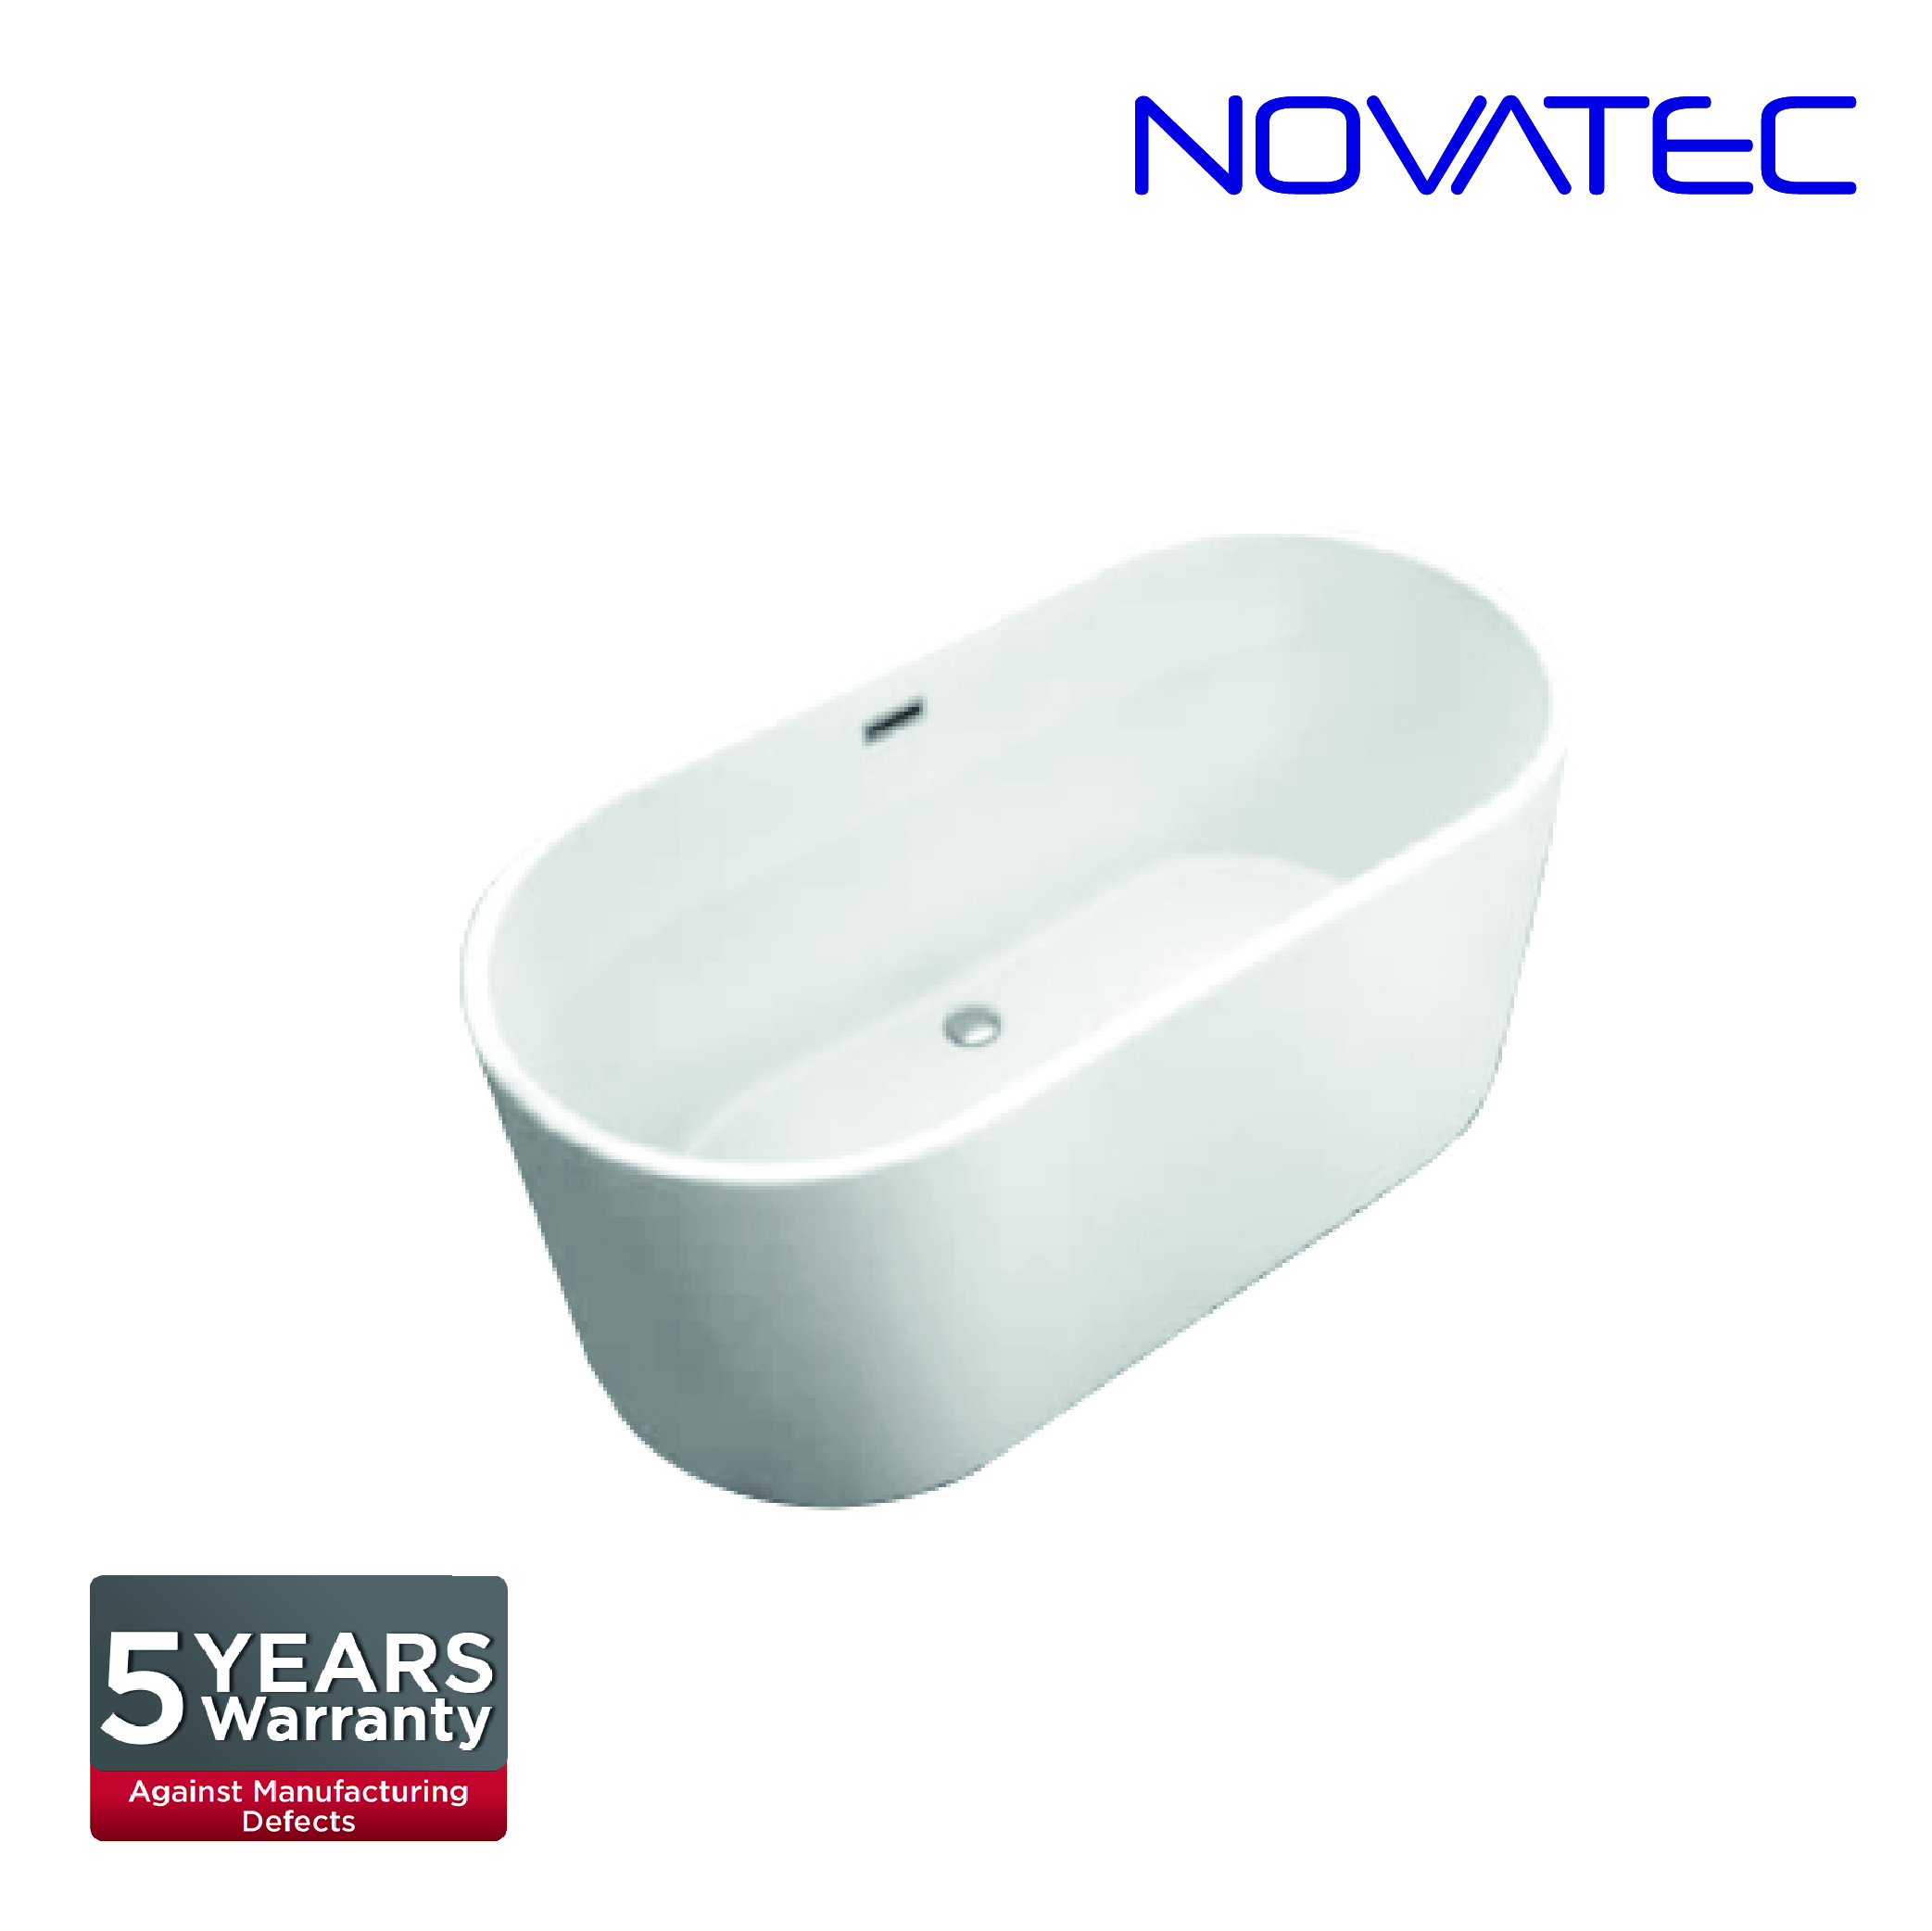 Novatec SW Madrid Bath Tub BT 160015A